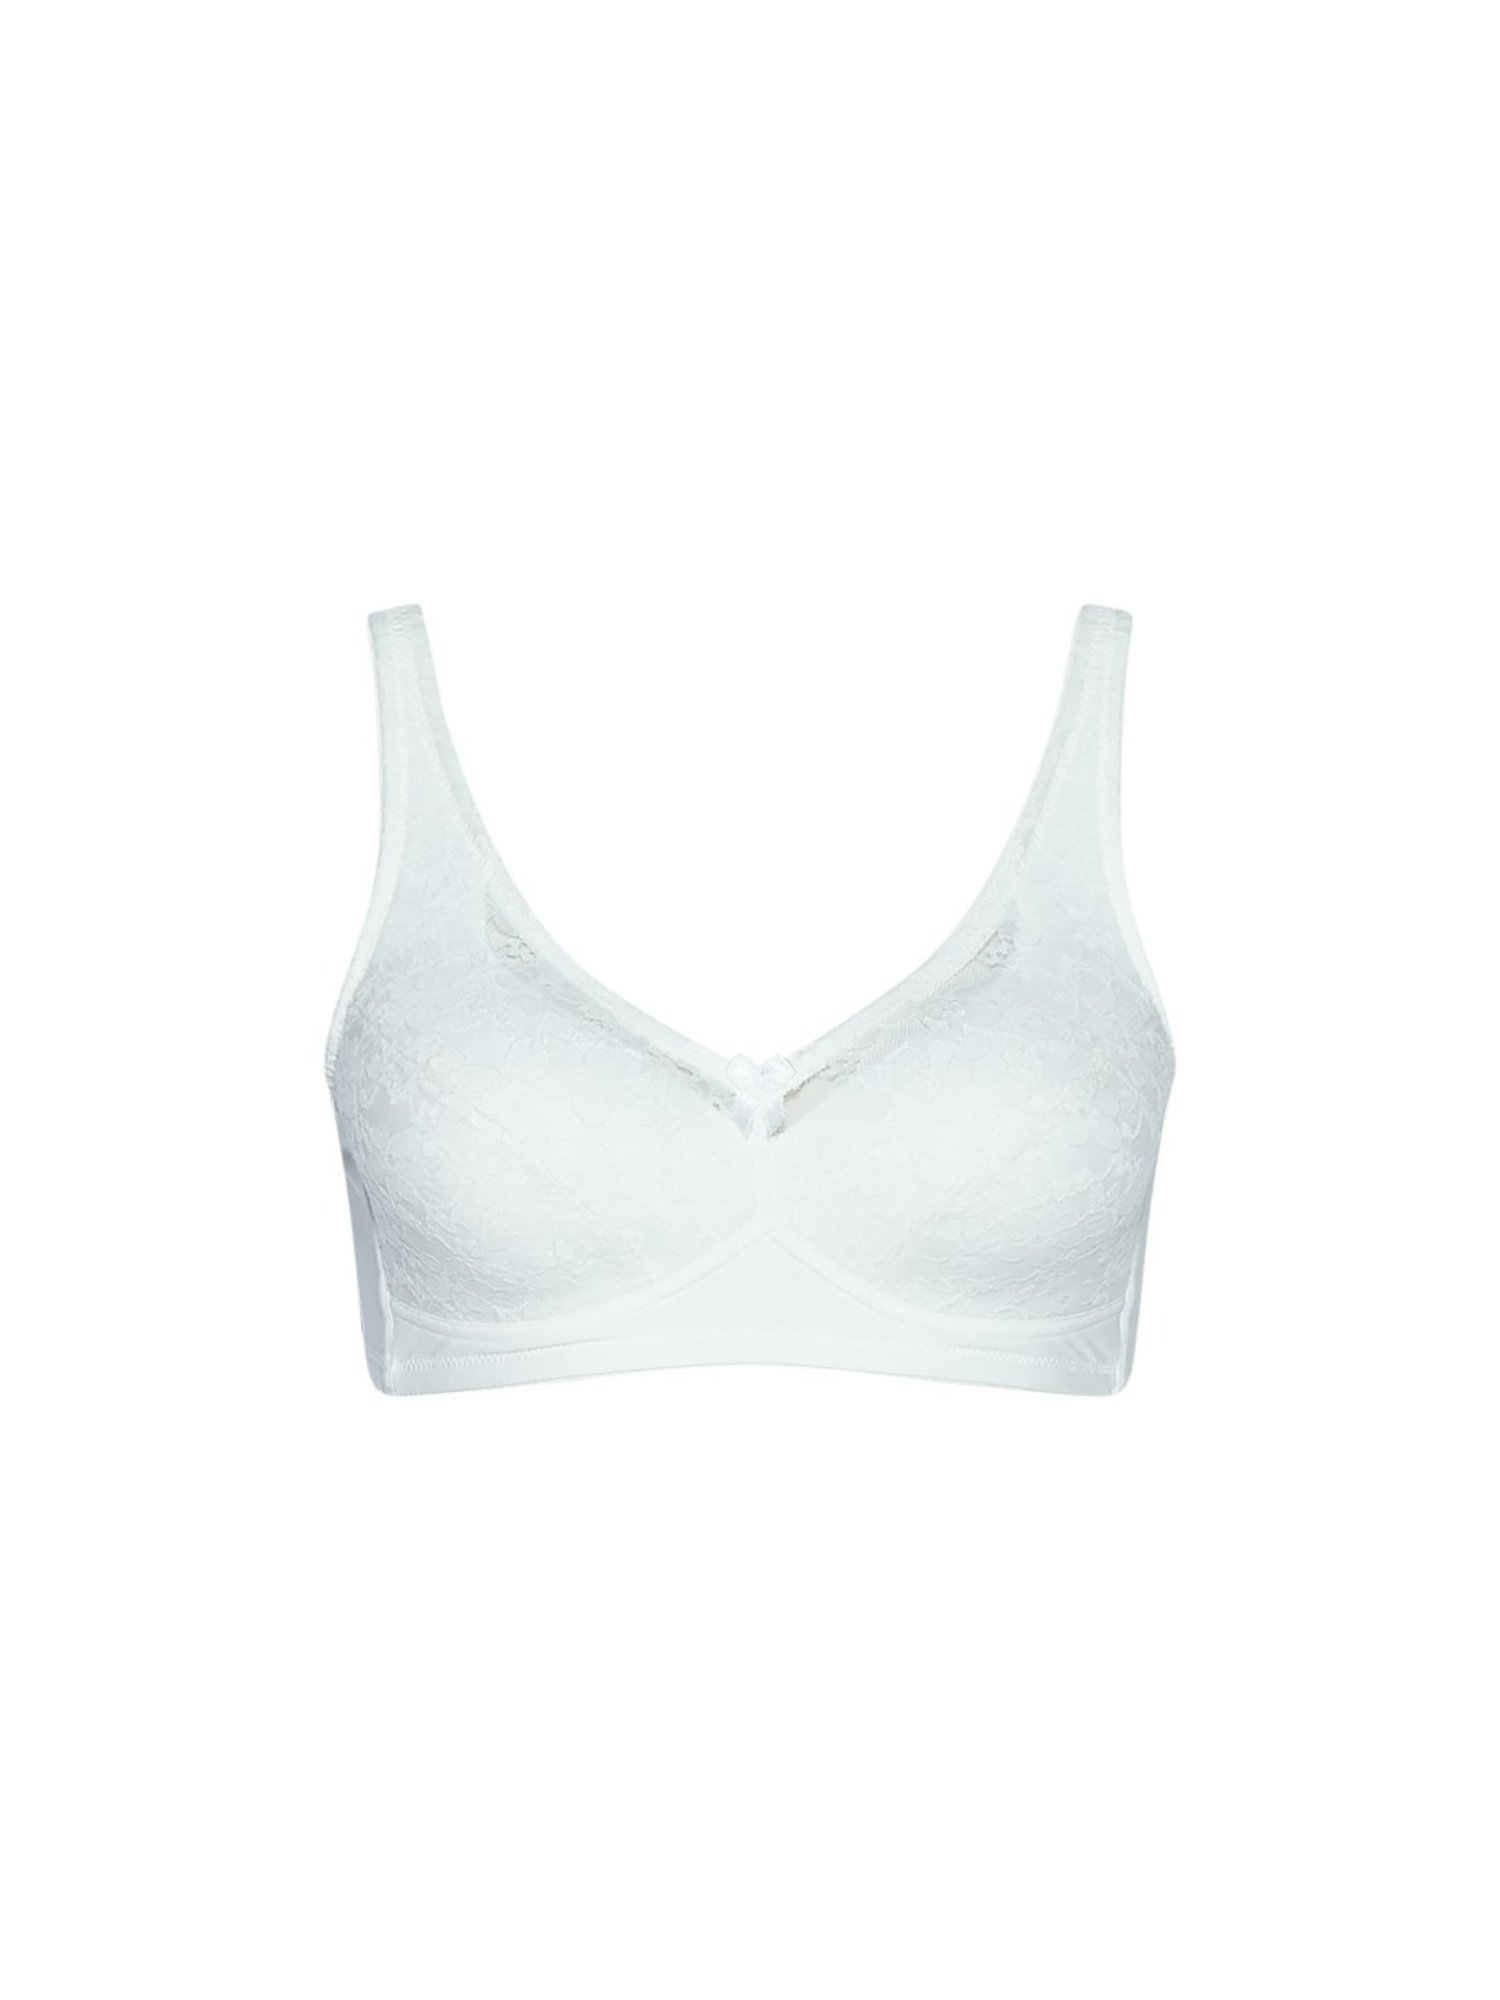 Buy Wunderlove by Westside White Padded Comfort Lace Bra for Women